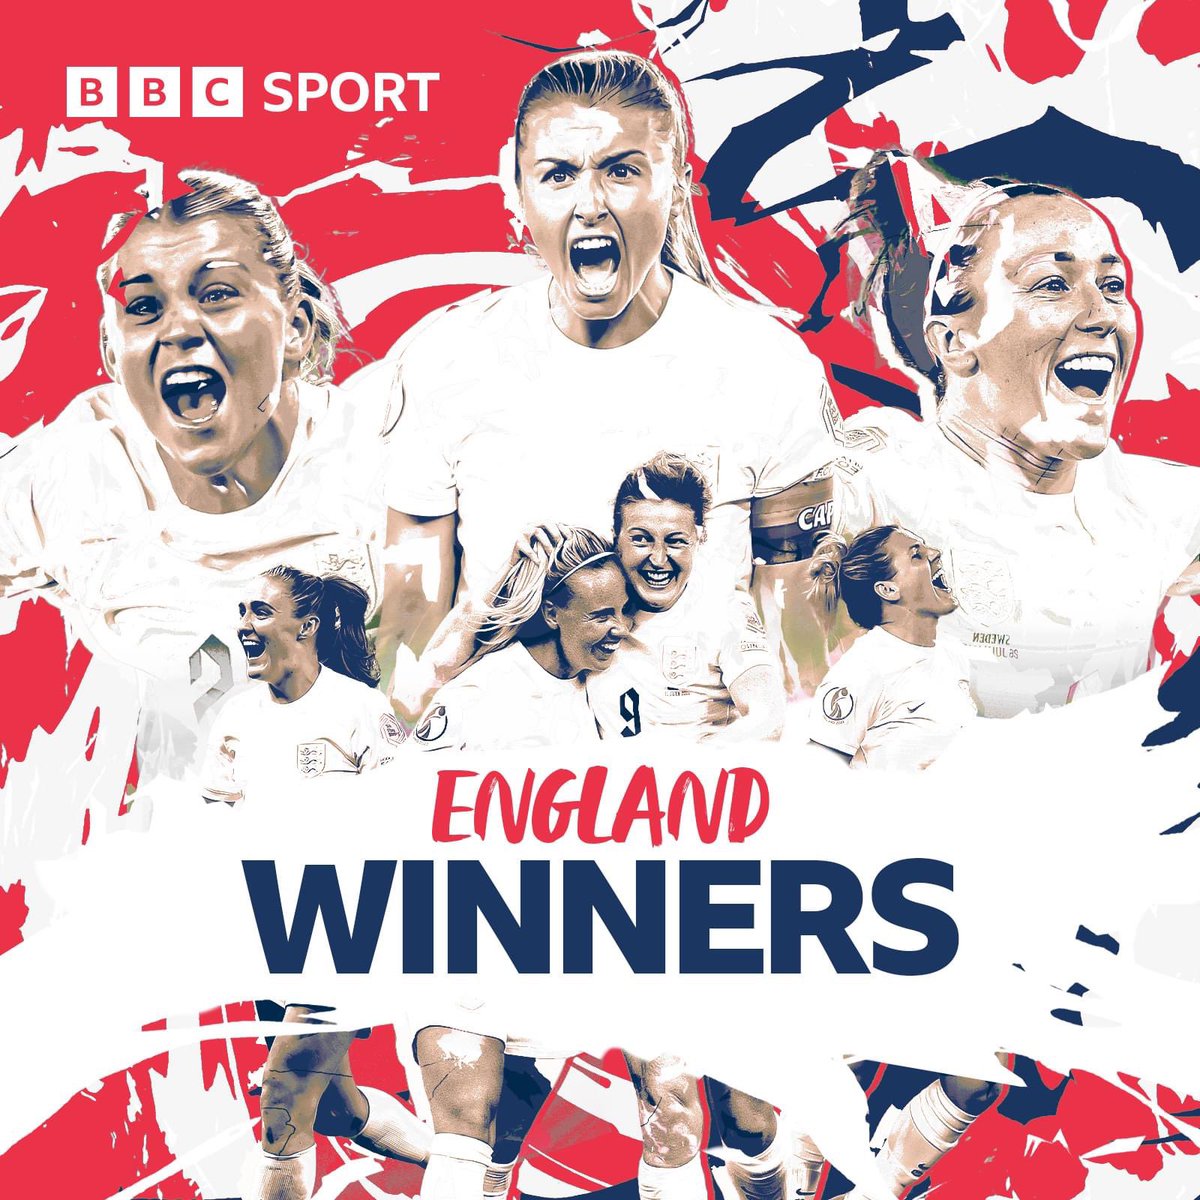 #Lionesses #EuropeanChampions #EnglandvGermany we are the champions, we are the champions🏴󠁧󠁢󠁥󠁮󠁧󠁿🏴󠁧󠁢󠁥󠁮󠁧󠁿🏴󠁧󠁢󠁥󠁮󠁧󠁿🏴󠁧󠁢󠁥󠁮󠁧󠁿🏴󠁧󠁢󠁥󠁮󠁧󠁿